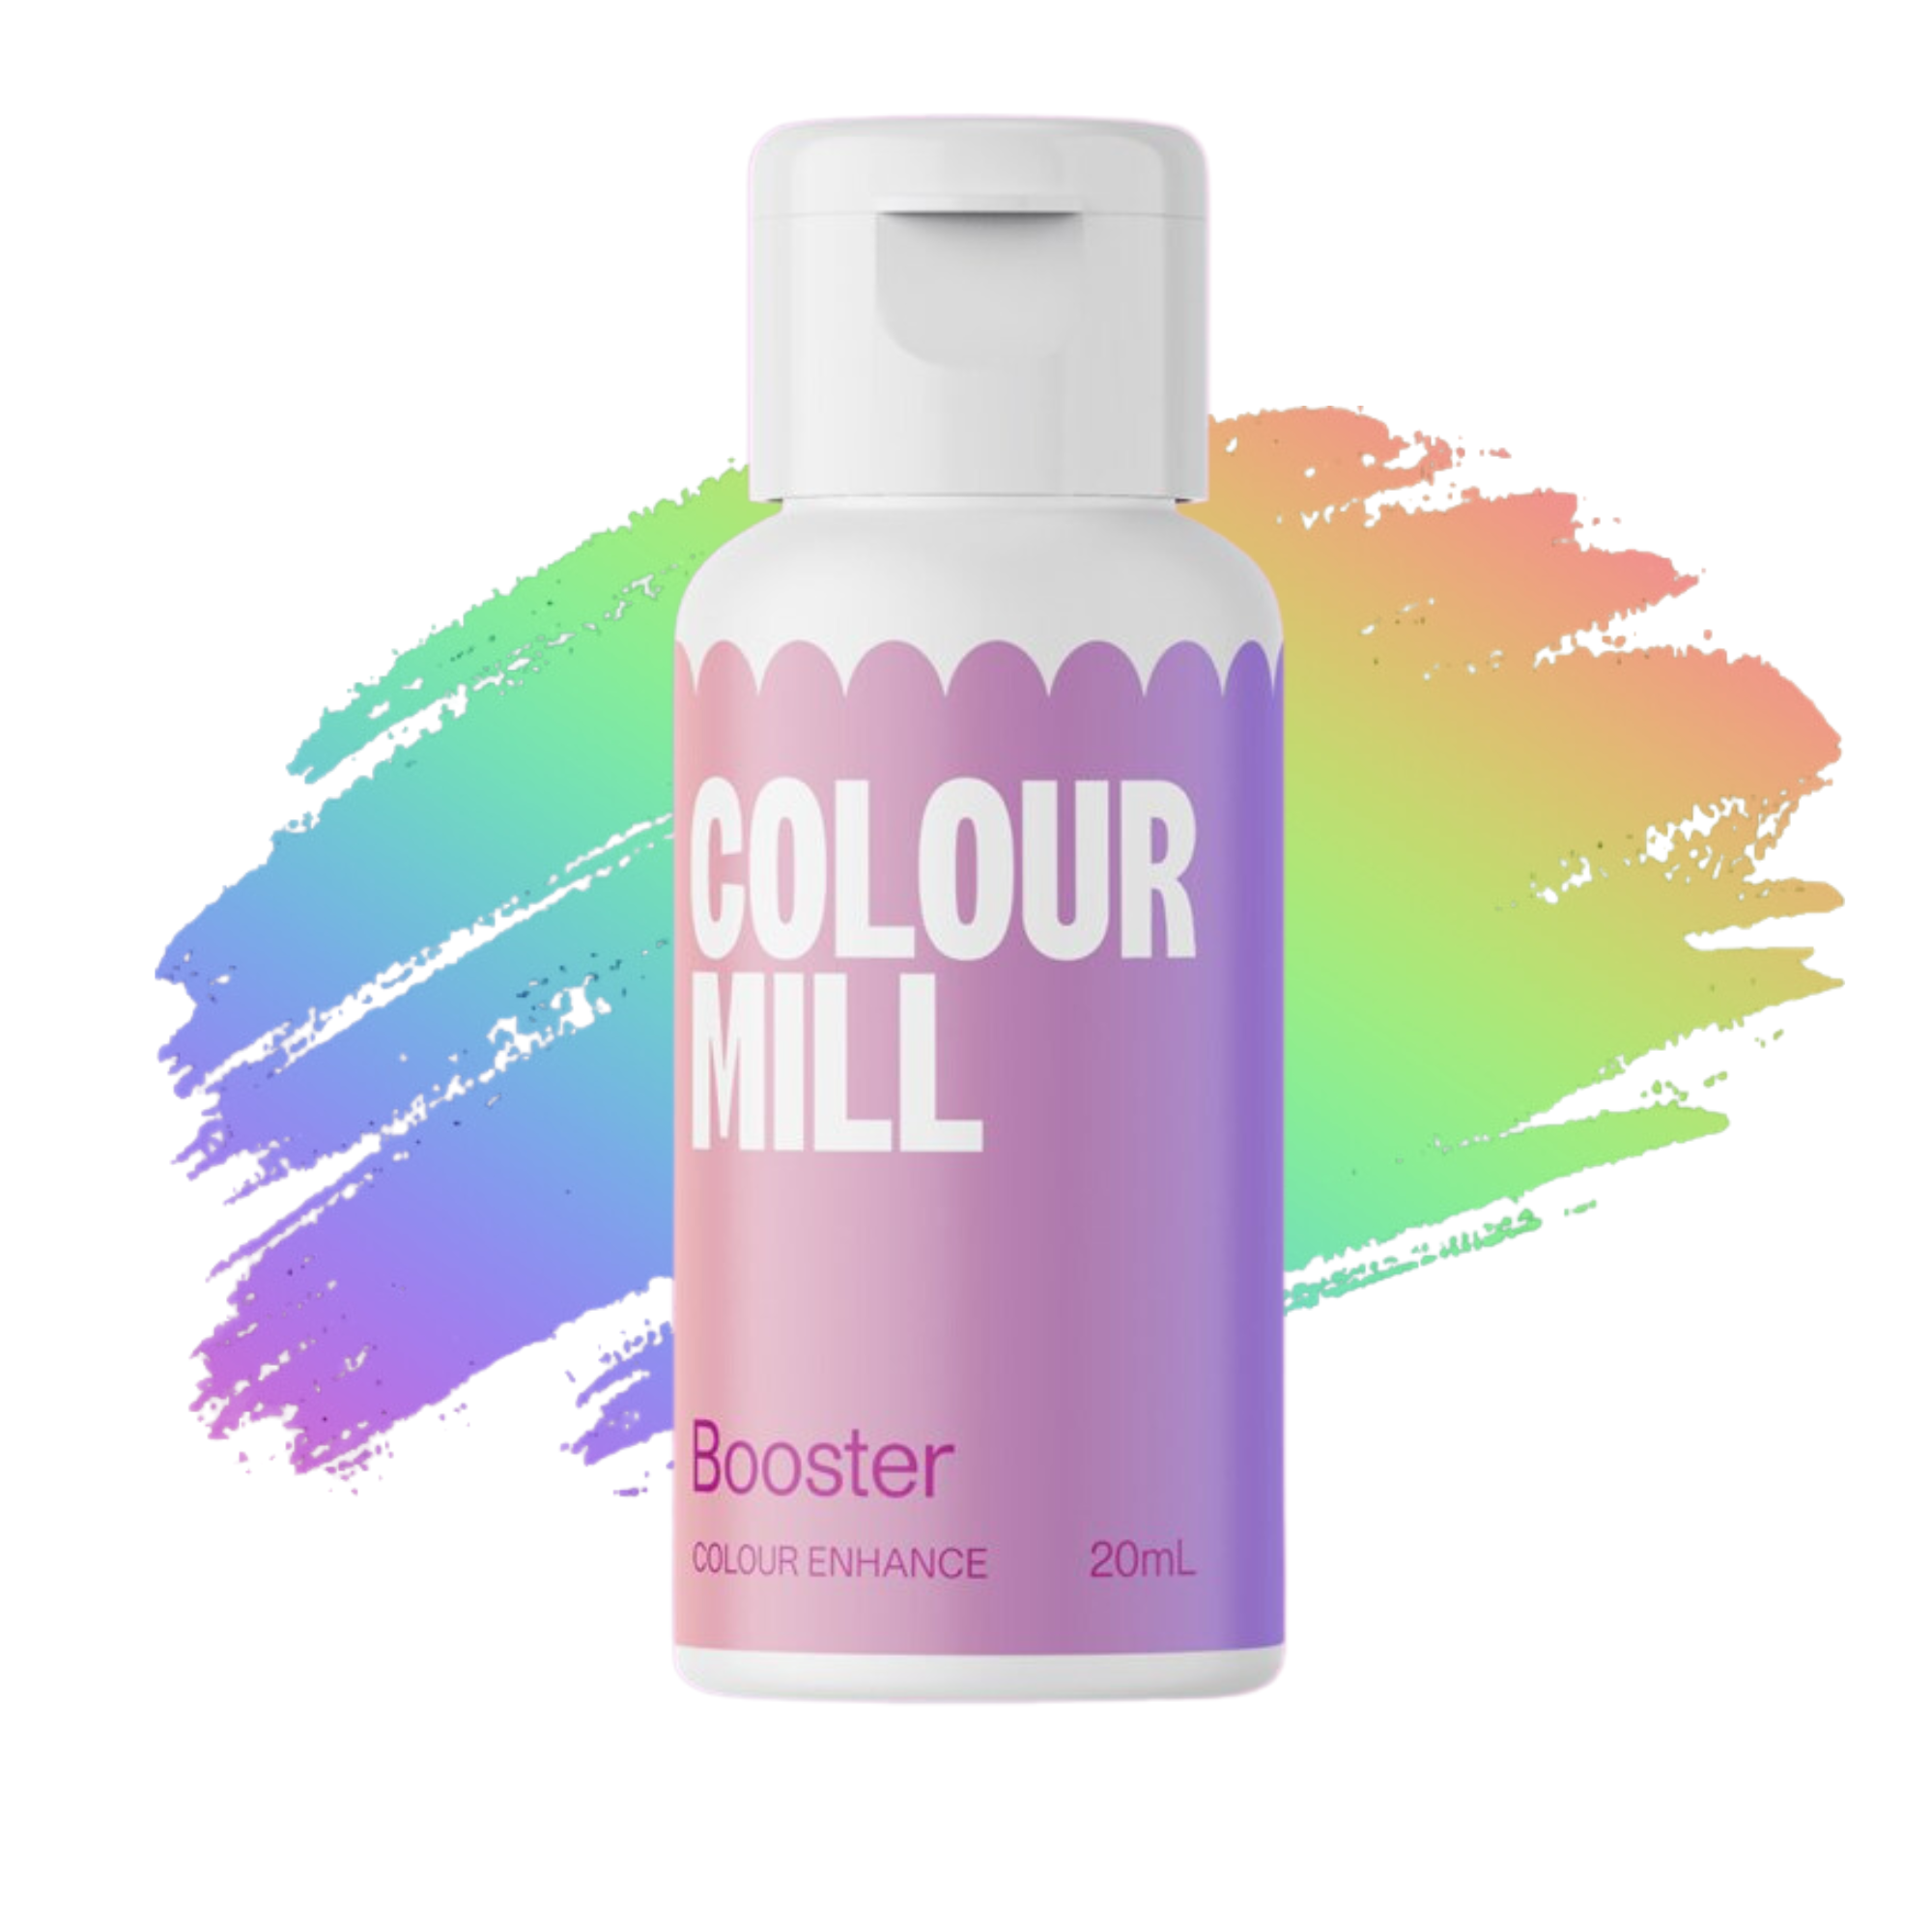 Colour Mill Booster Flo Coat Colour Enhancer 20ml